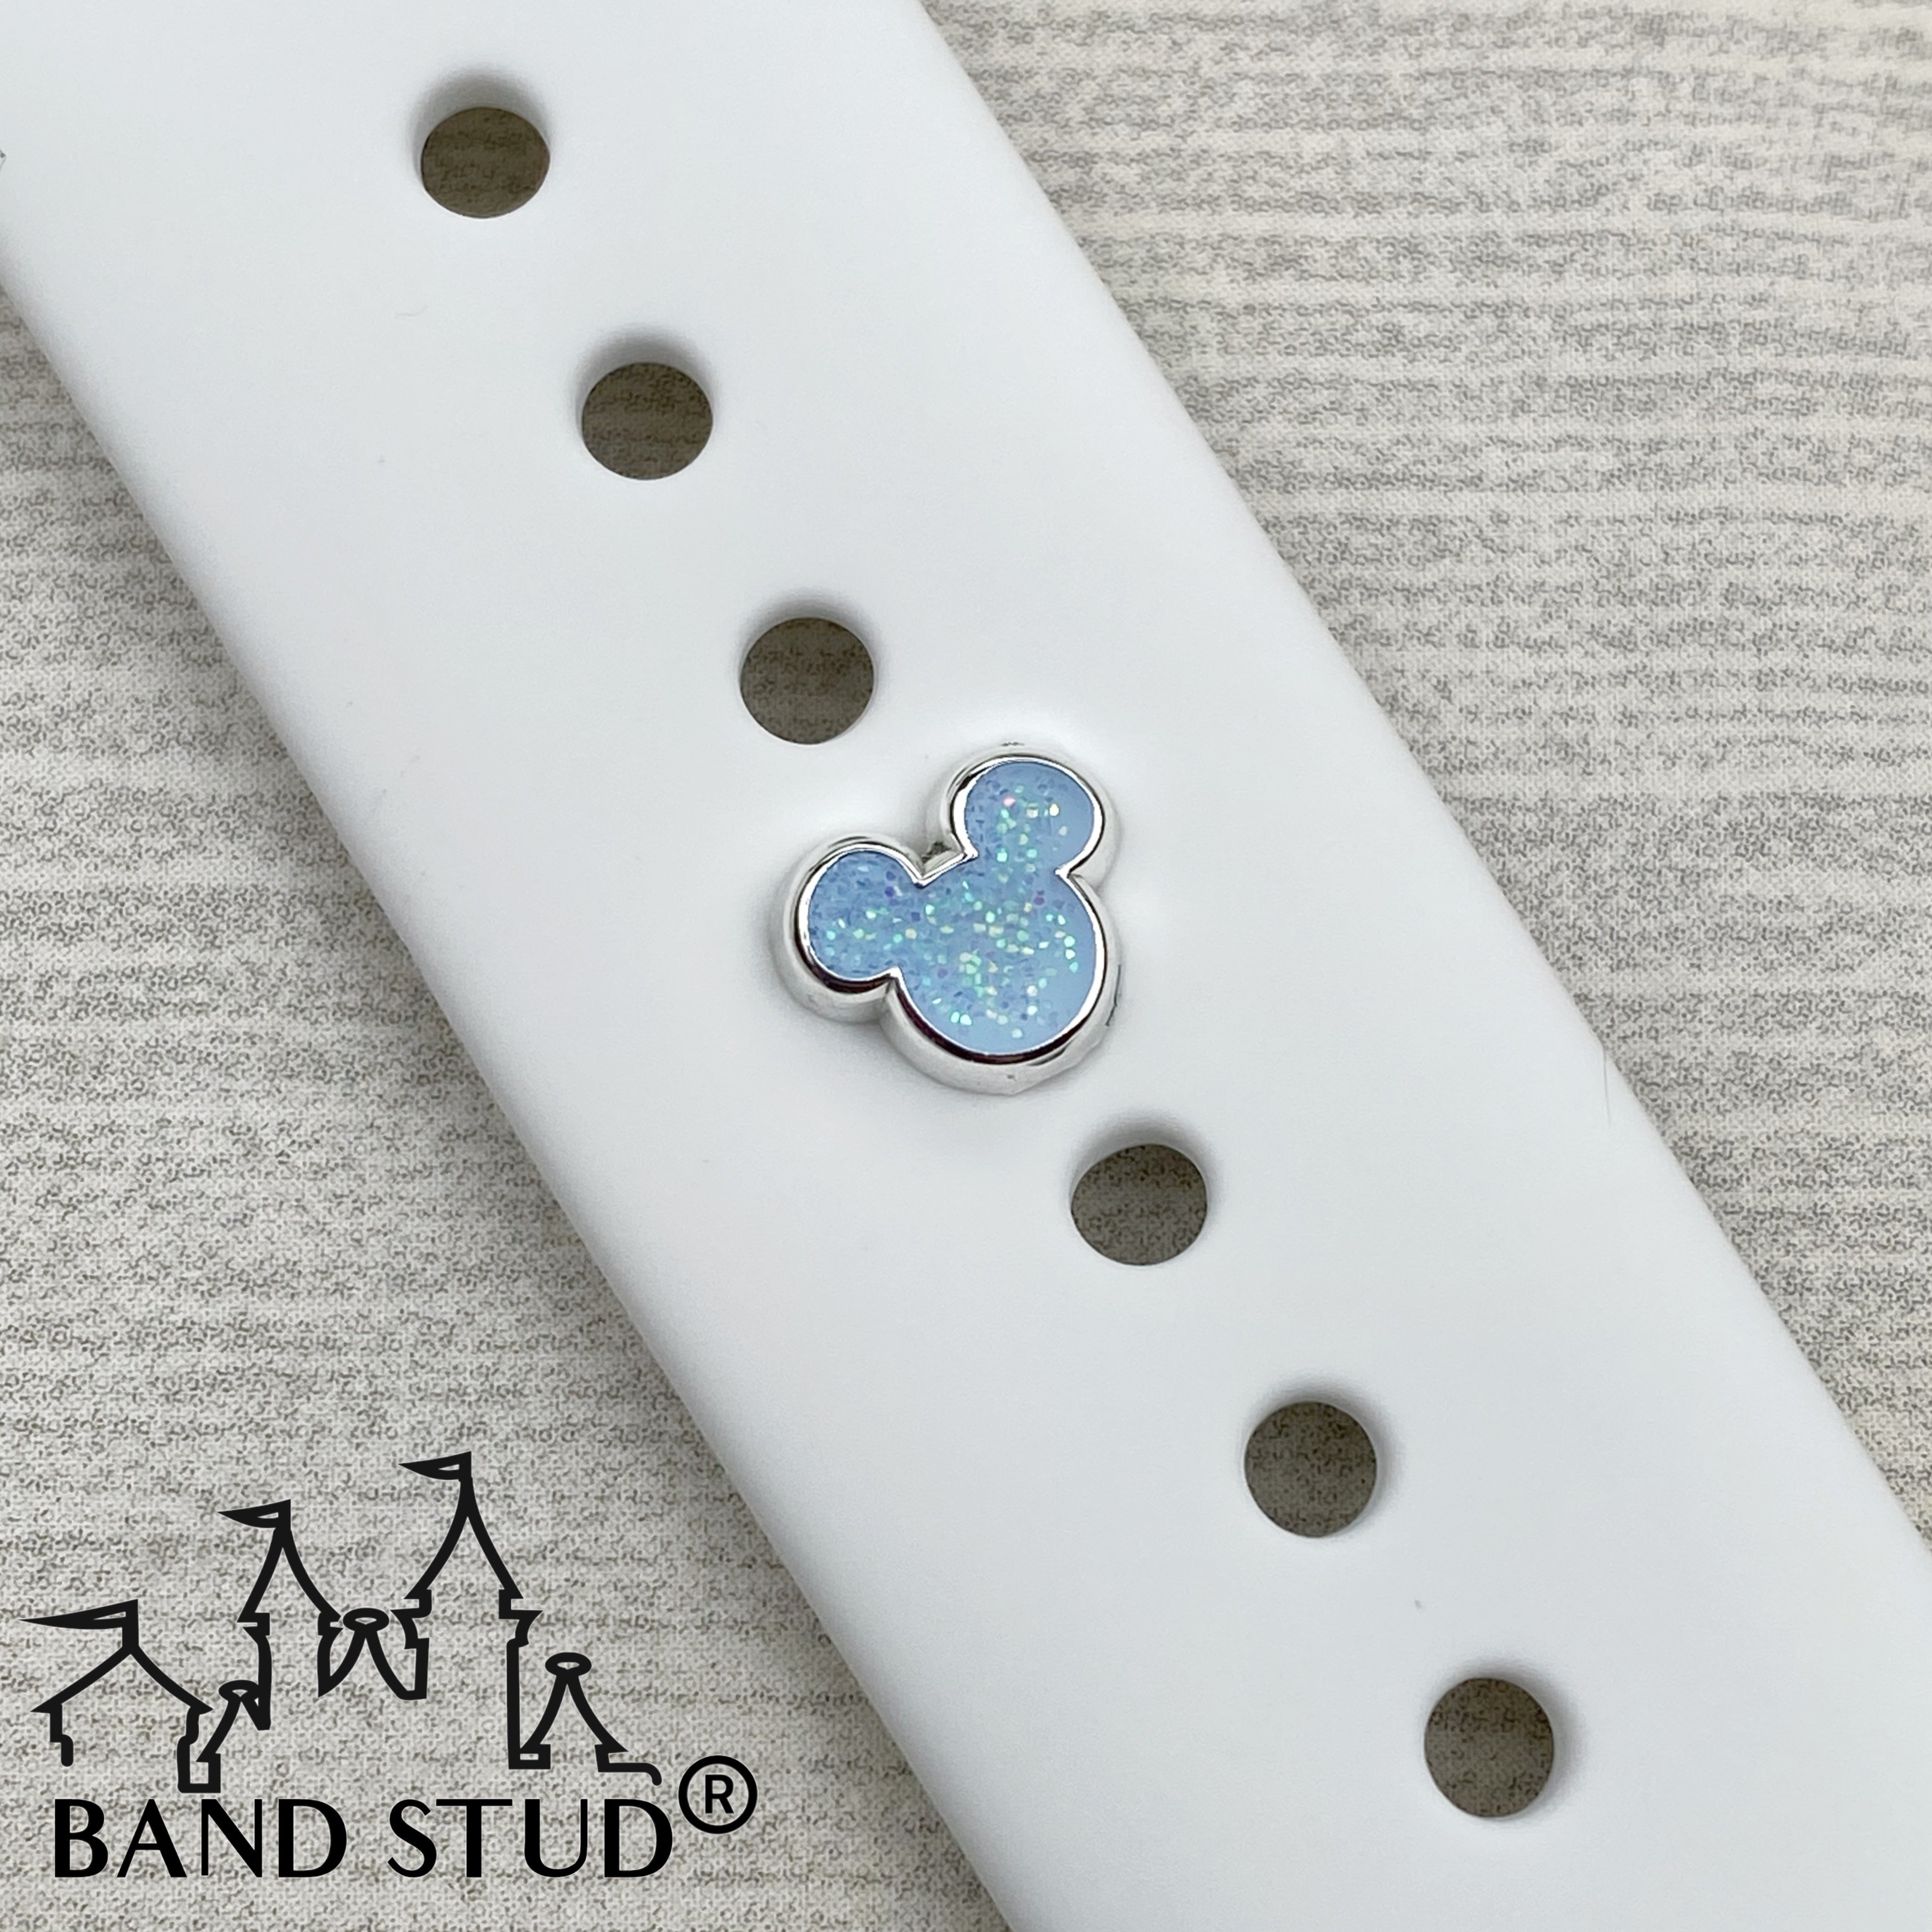 Band Stud® Mini - The Classics - enamel